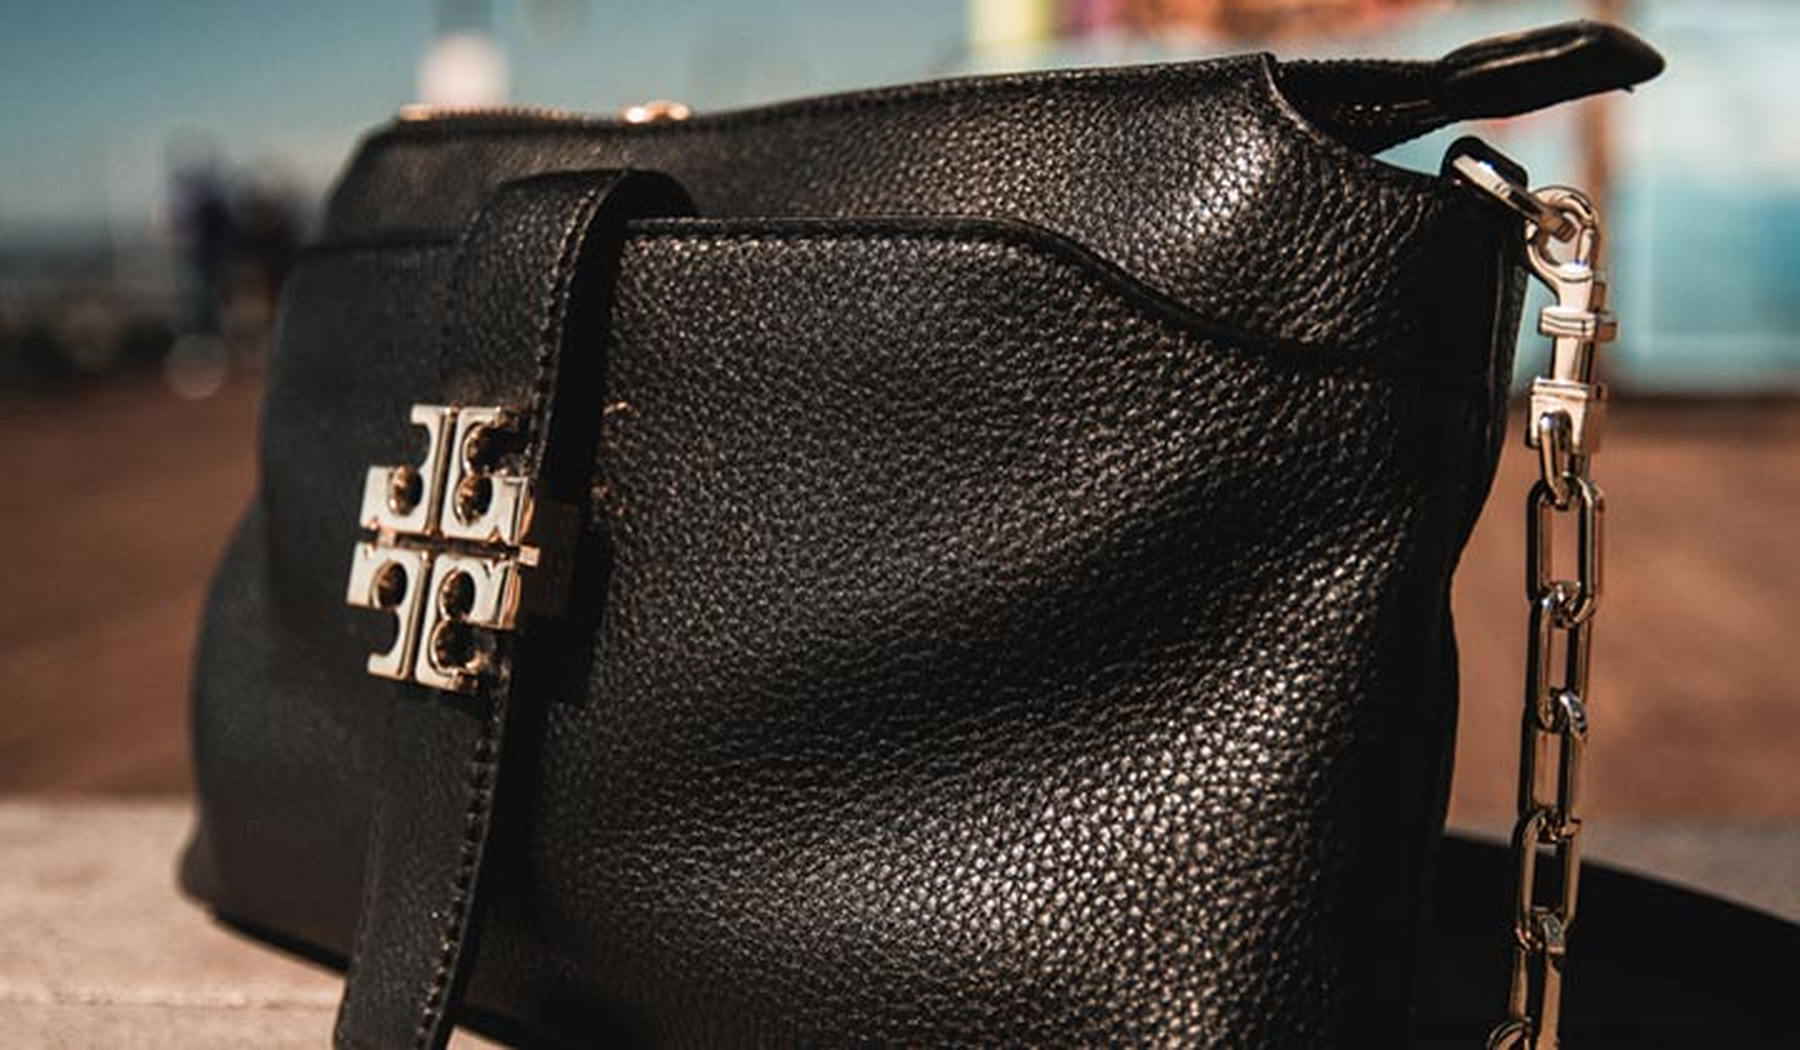 Black leather Tory Burch purse